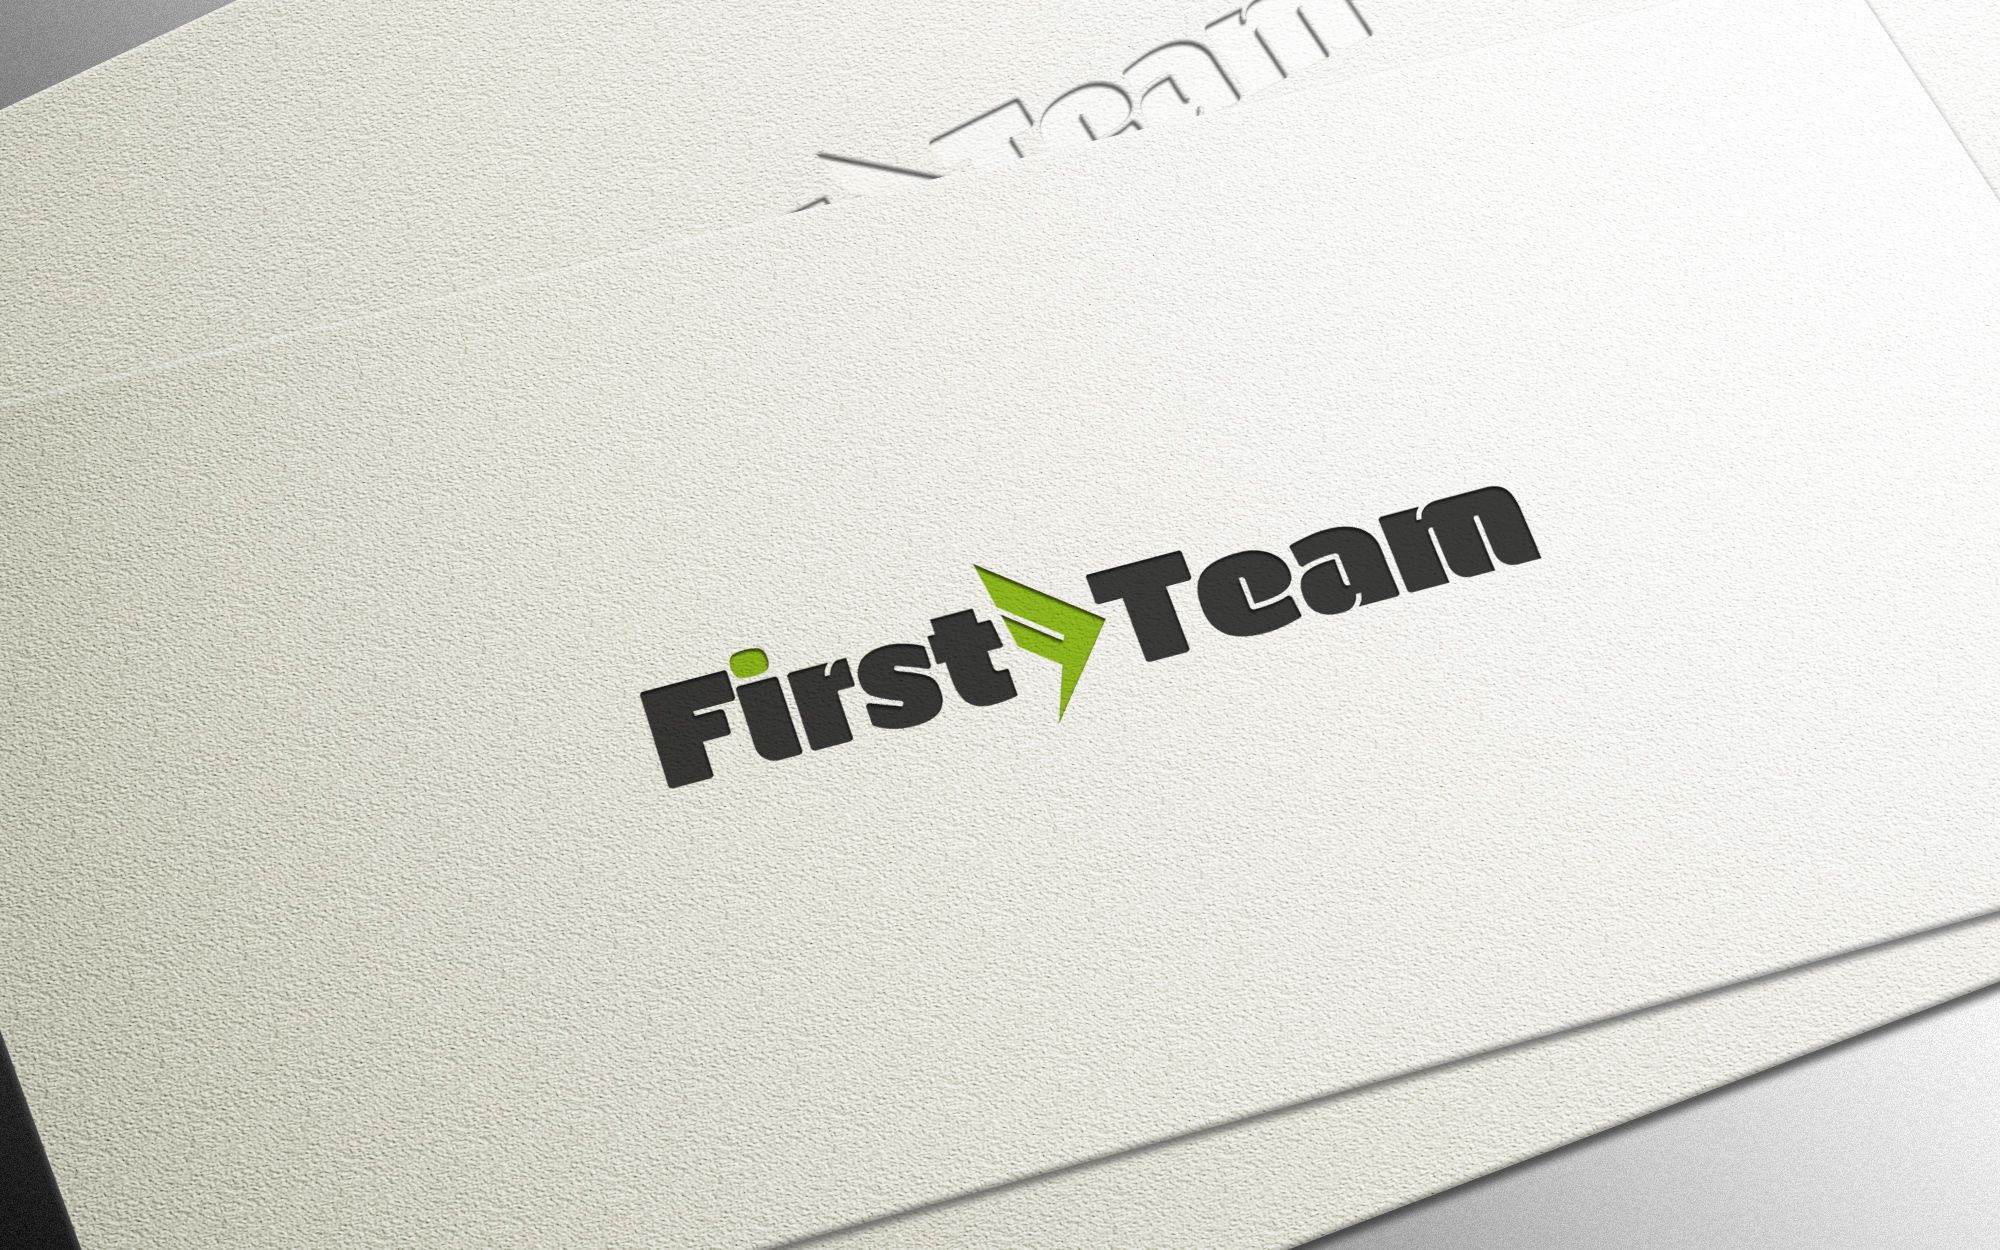 Логотип для продавца яхт - компании First Team - дизайнер Gas-Min